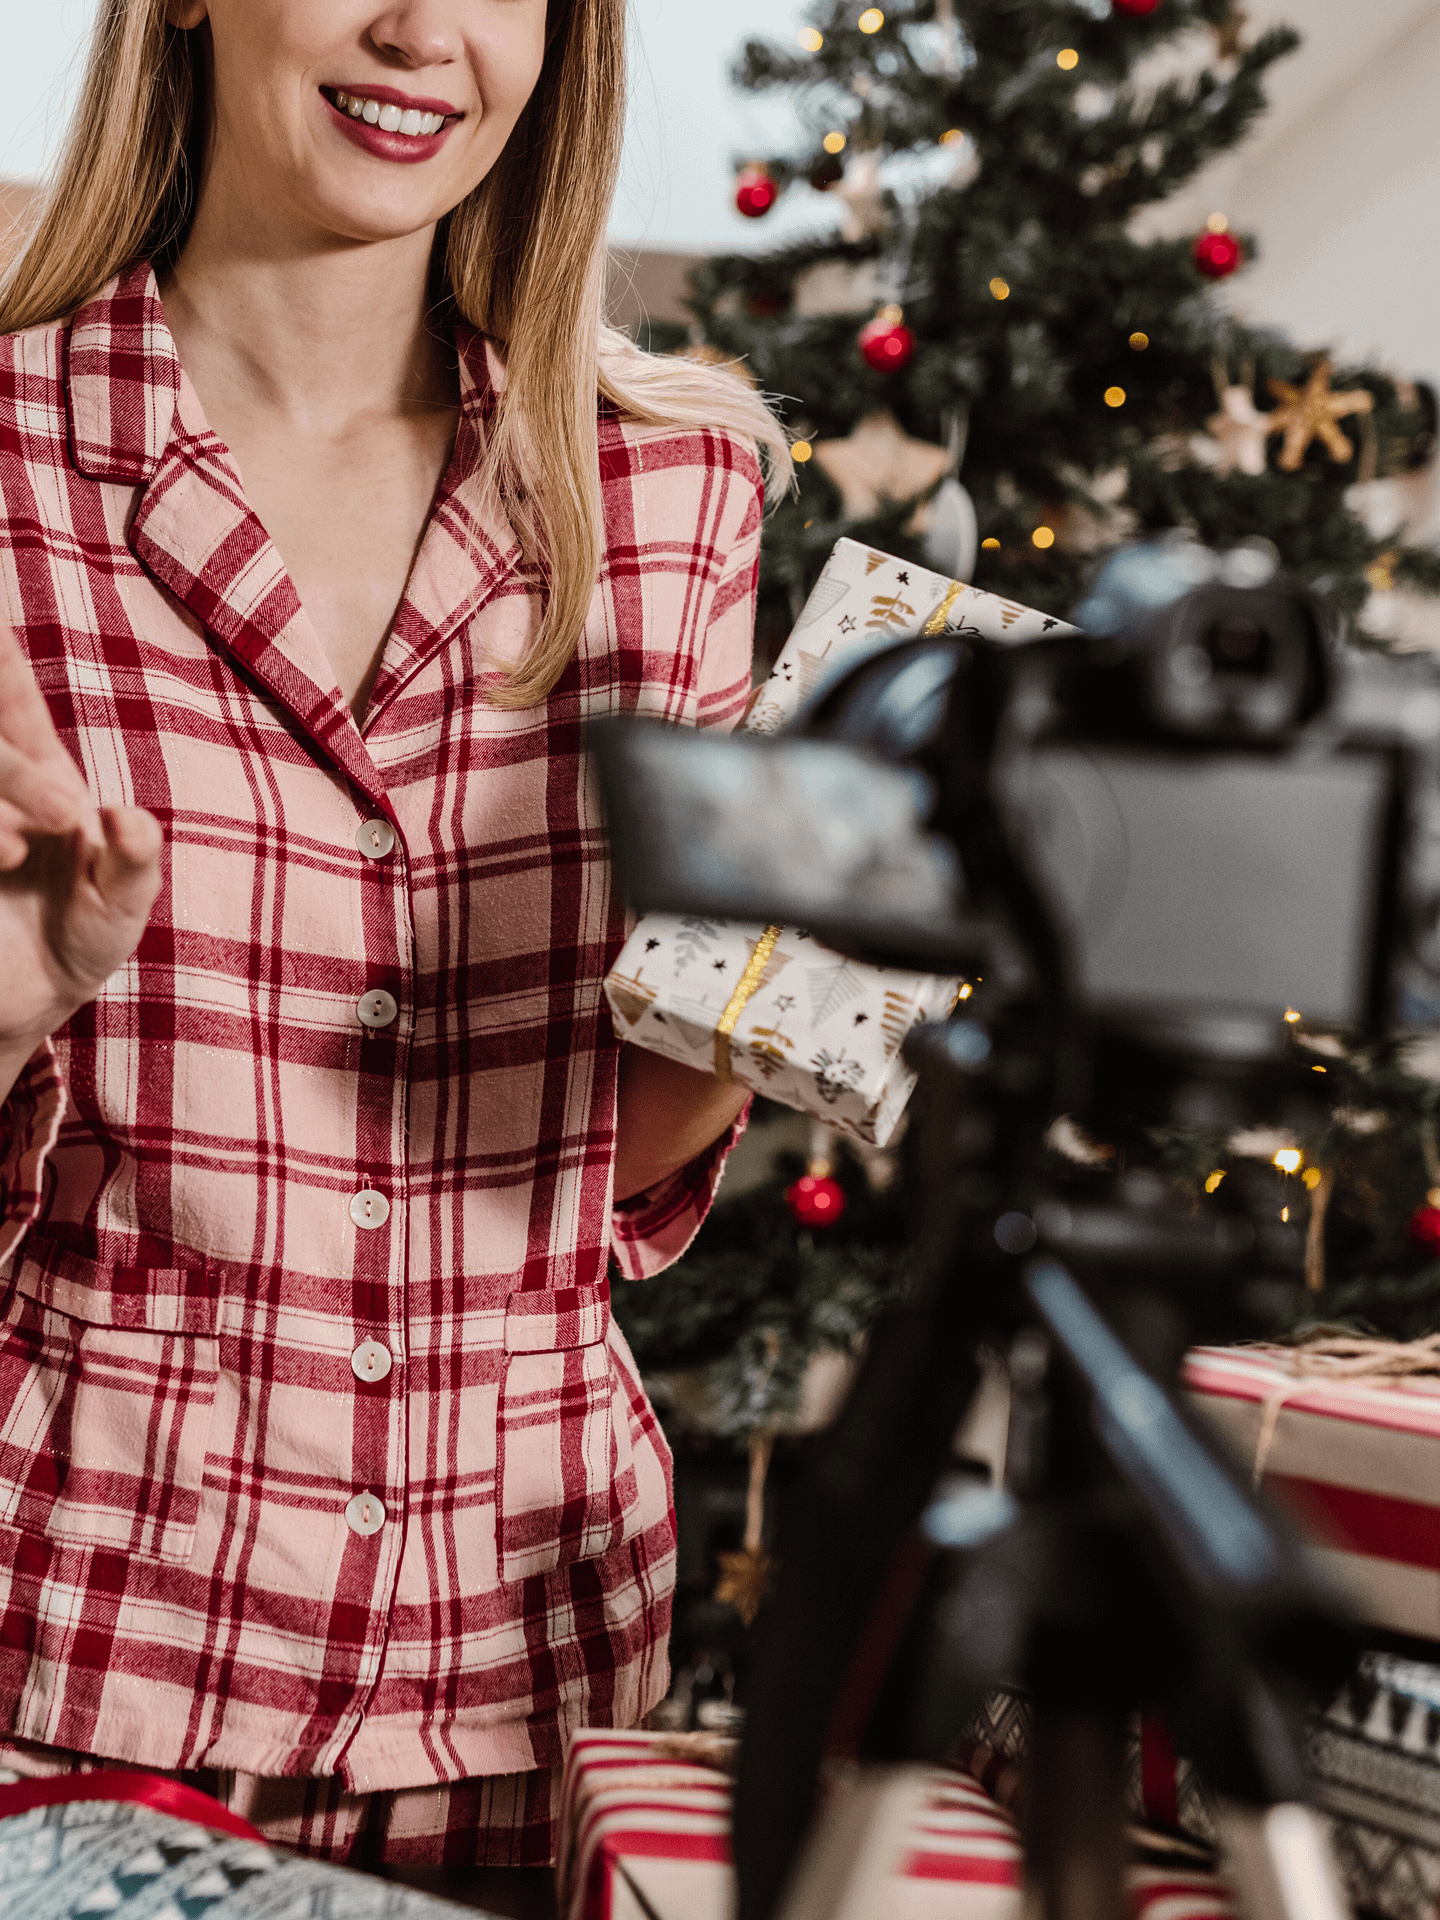 Spreading Holiday Cheer: 10 TikTok Content Ideas for the Festive Season